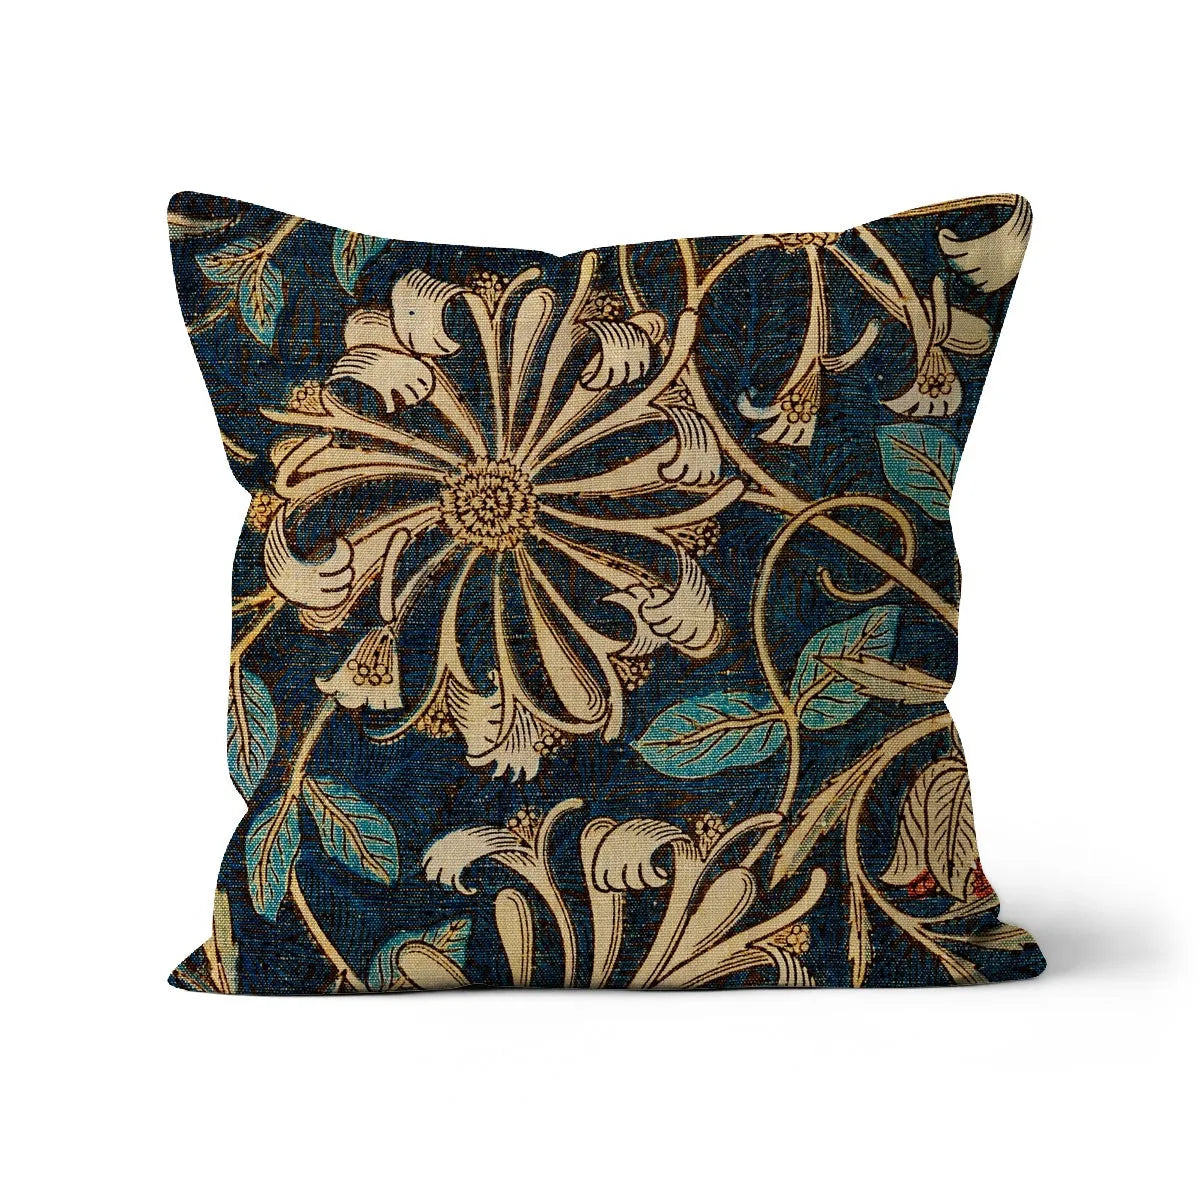 Honeysuckle 3 - William Morris Cushion - Decorative Throw Pillow - Linen / 18’x18’ - Throw Pillows - Aesthetic Art